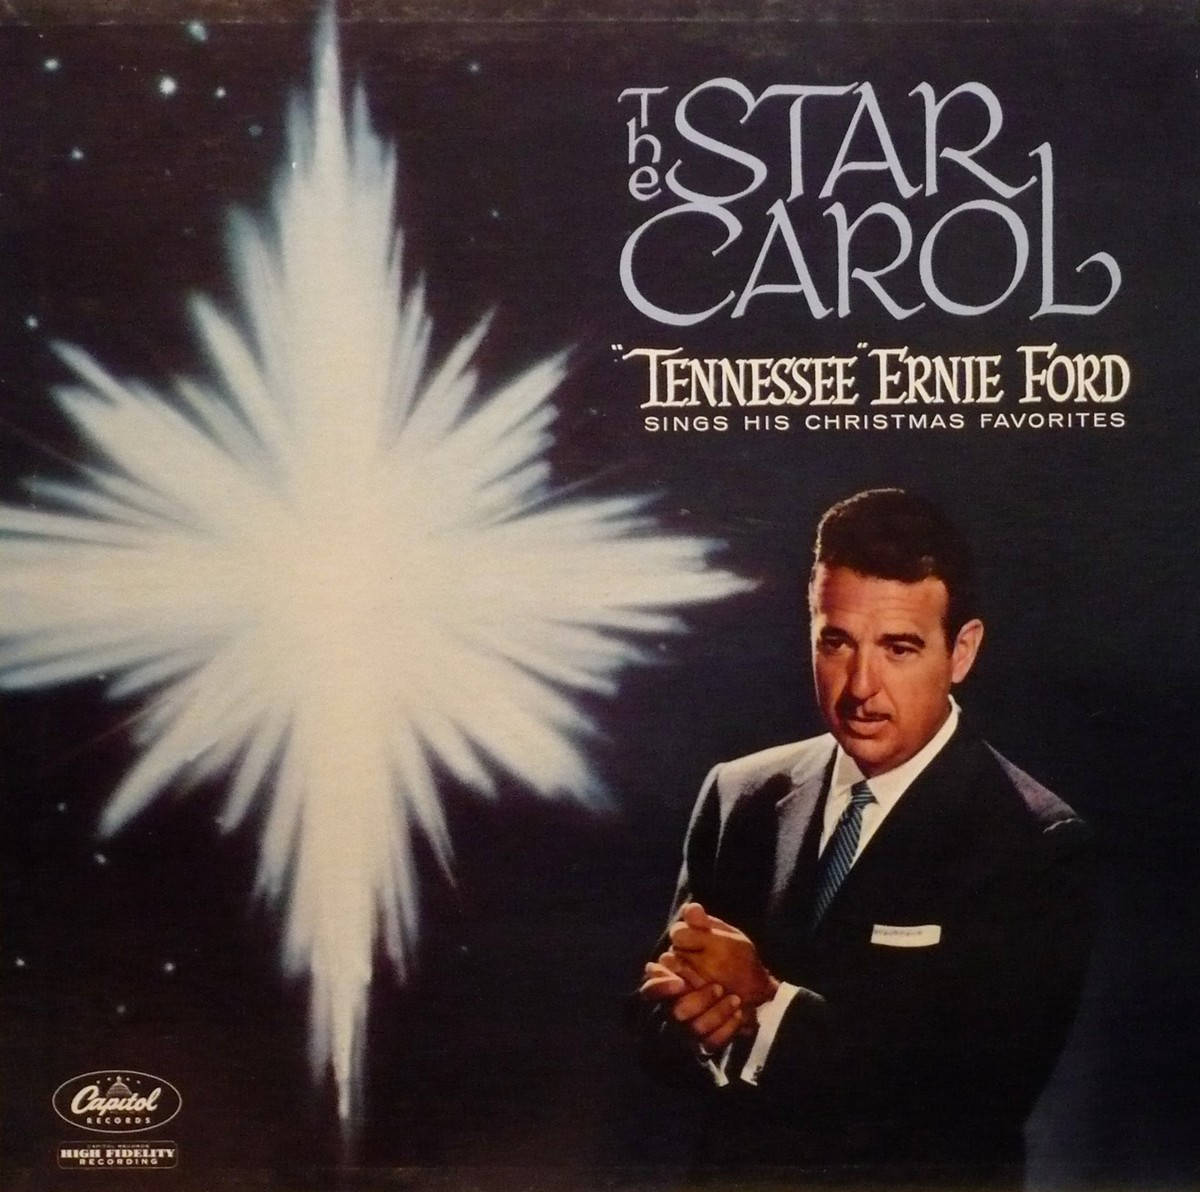 Tennesseeernie Ford Para La Estrella Carol. Fondo de pantalla